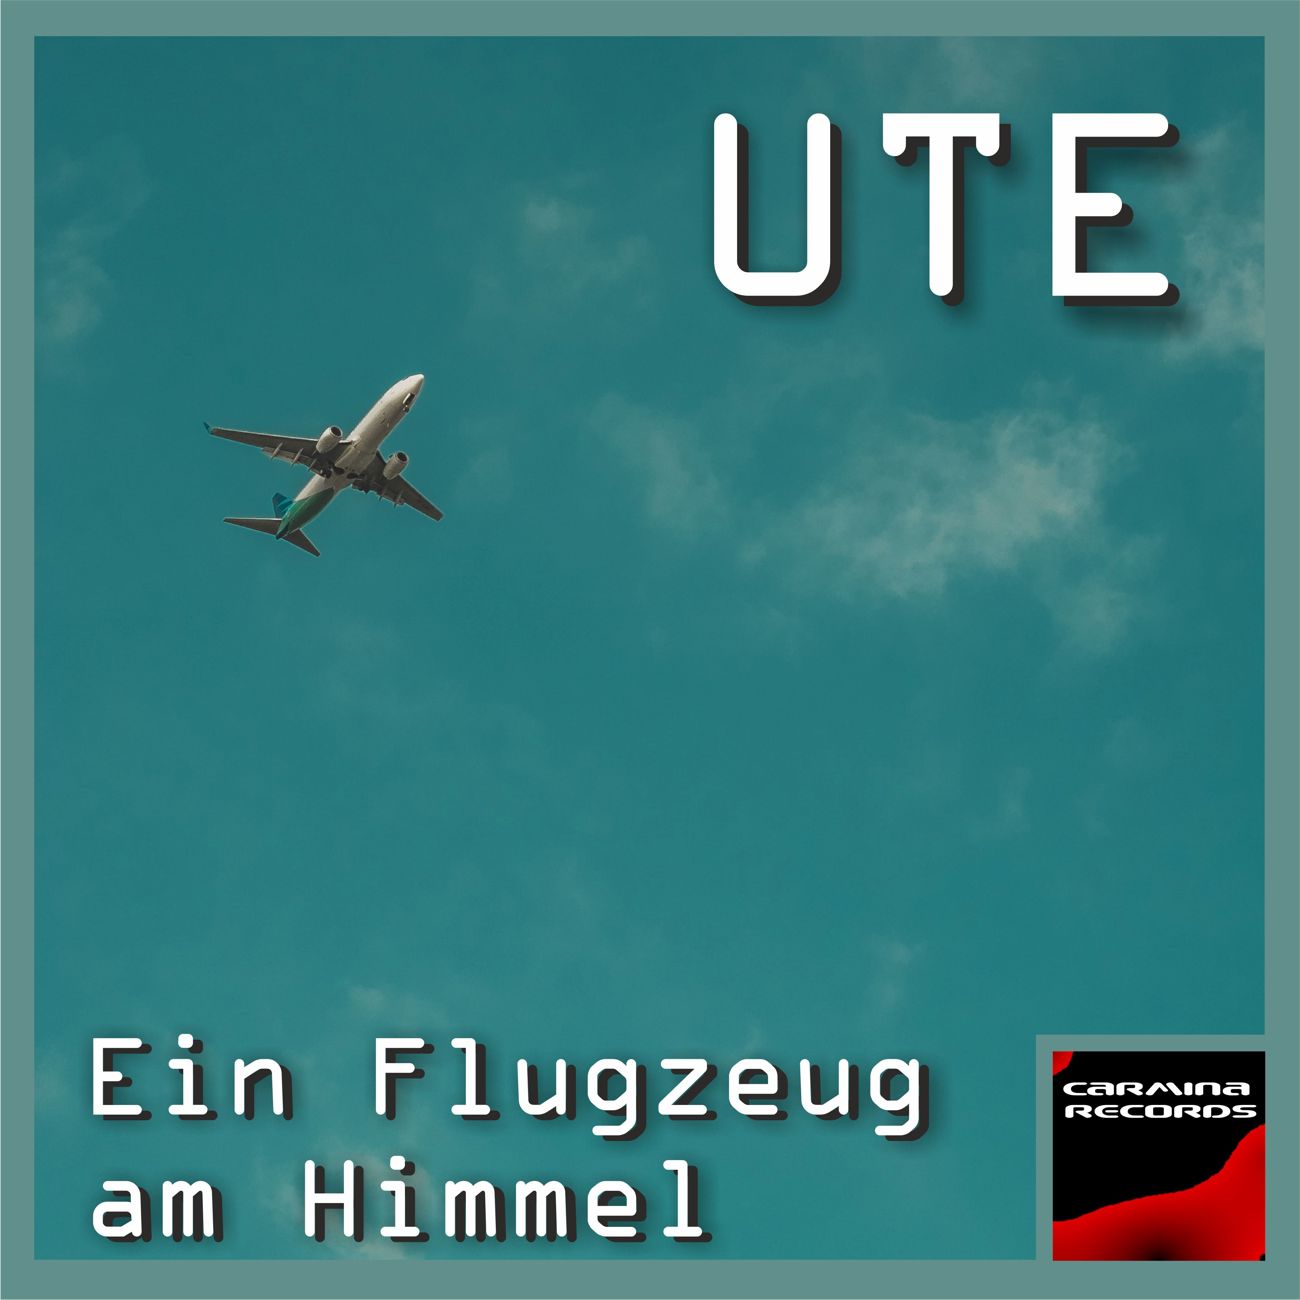 Ute - Ein Flugzeug am Himmel - cover.jpg